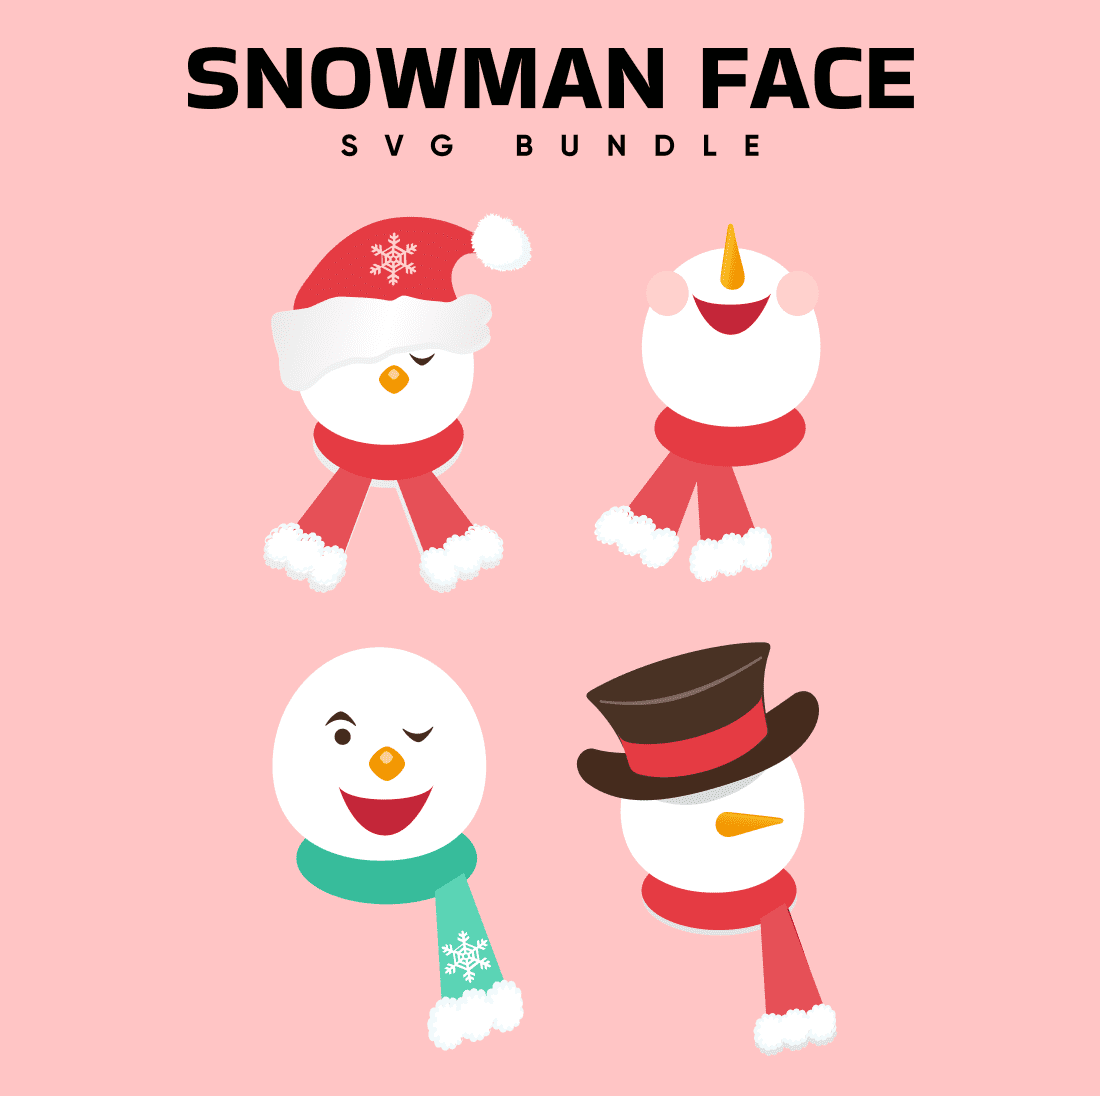 Image of faces of snowmen with Christmas scarves around their necks.